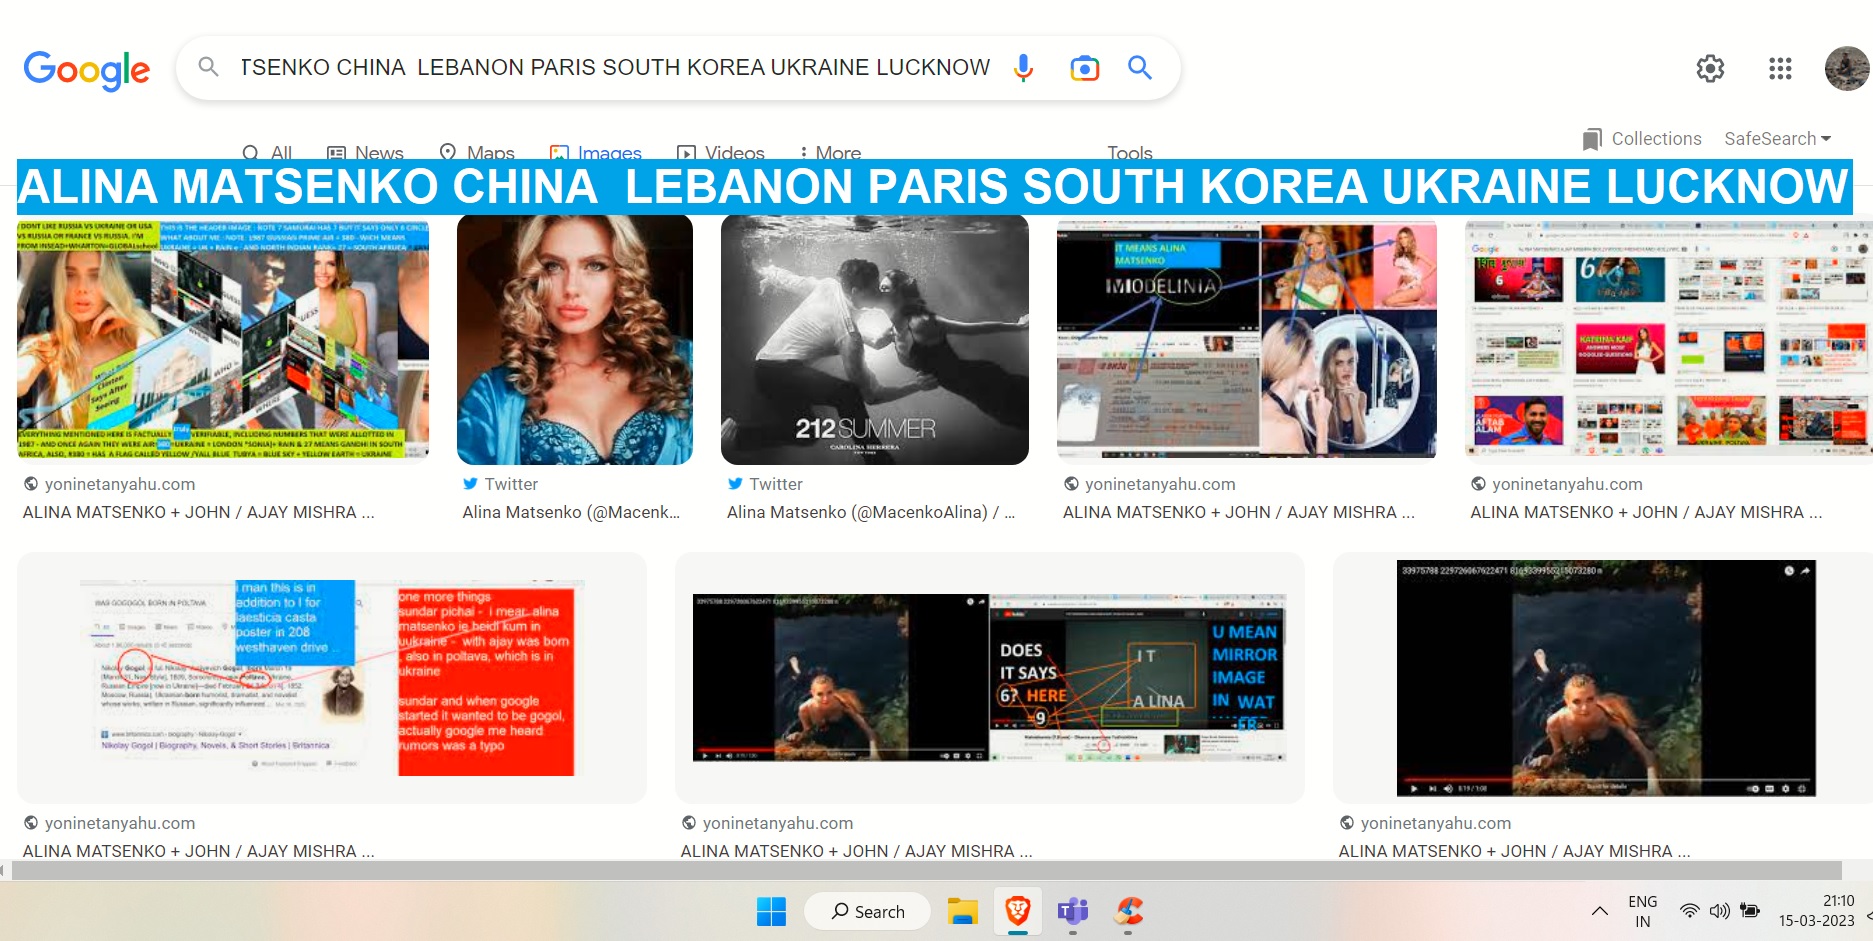 ALINA MATSENKO CHINA LEBANON PARIS SOUTH KOREA UKRAINE LUCKNOW MISSION VISION STORY AND COMMUNICATION MATSENKO MISHRA TRUE LOVE STORY